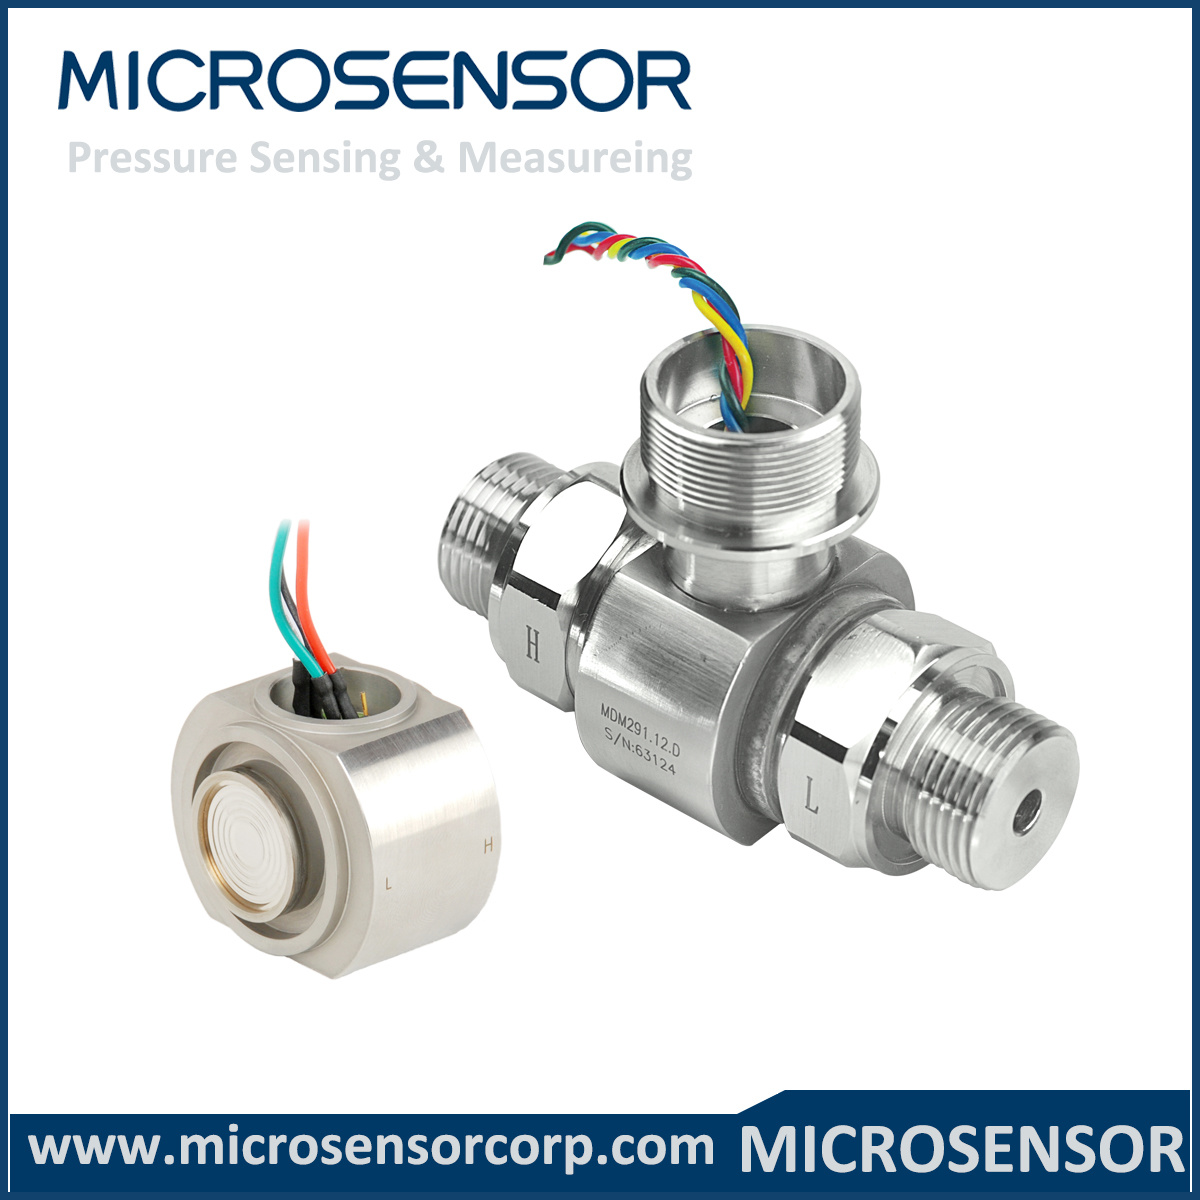 SS316L Welded Differential Pressure Sensor for Liquid (MDM291)